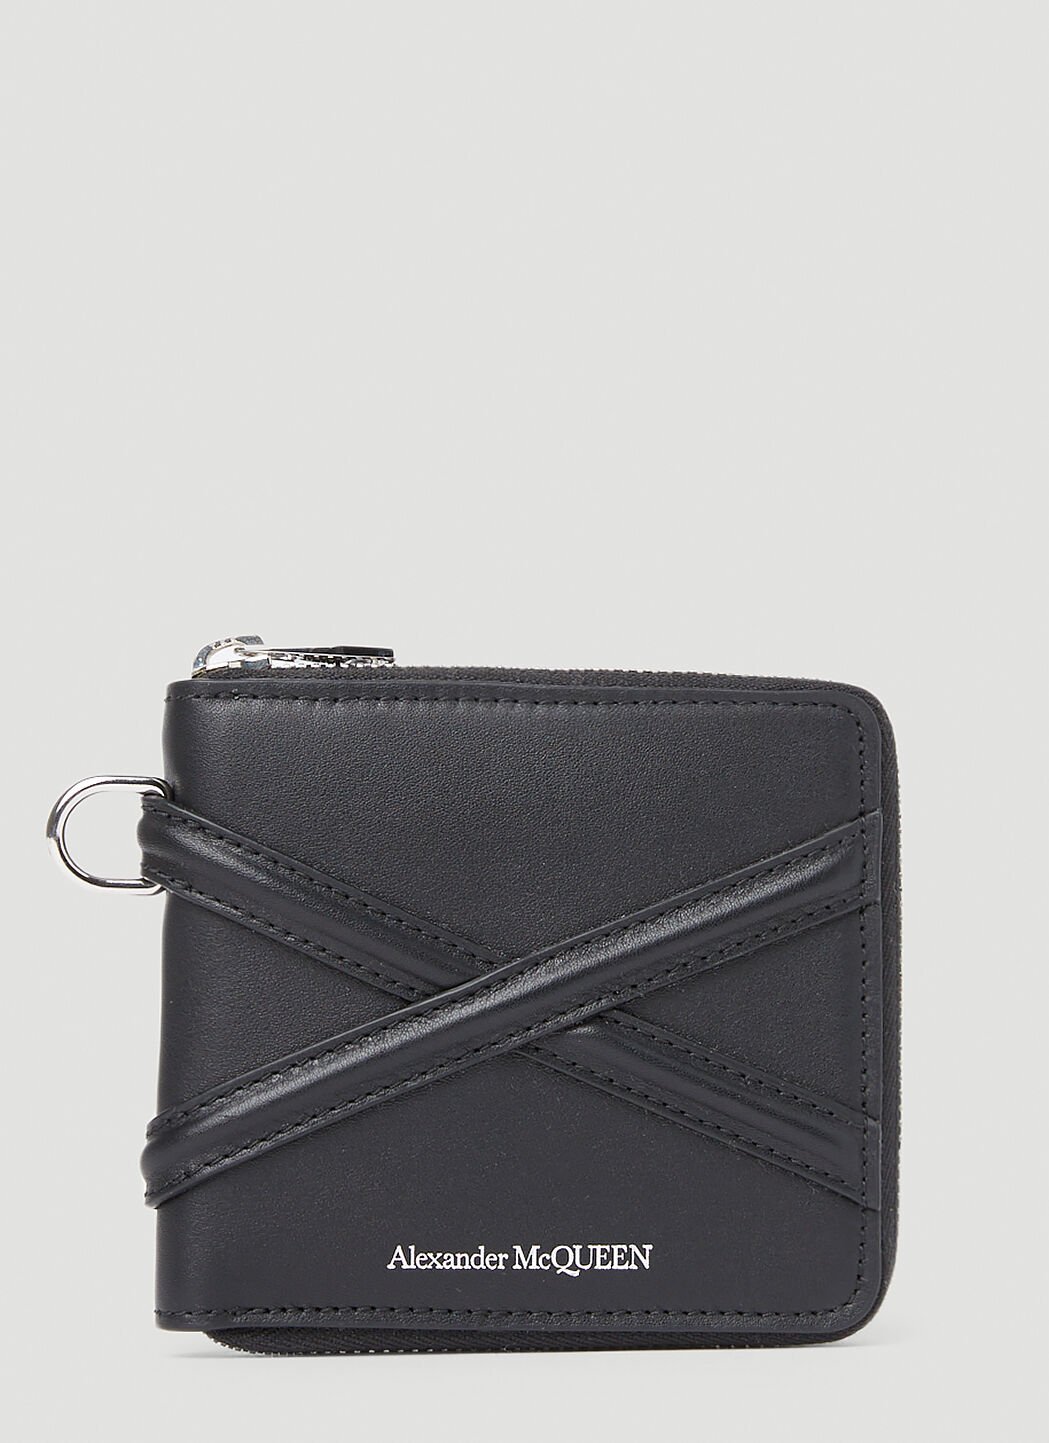 Alexander McQueen Logo Wallet Black amq0152002